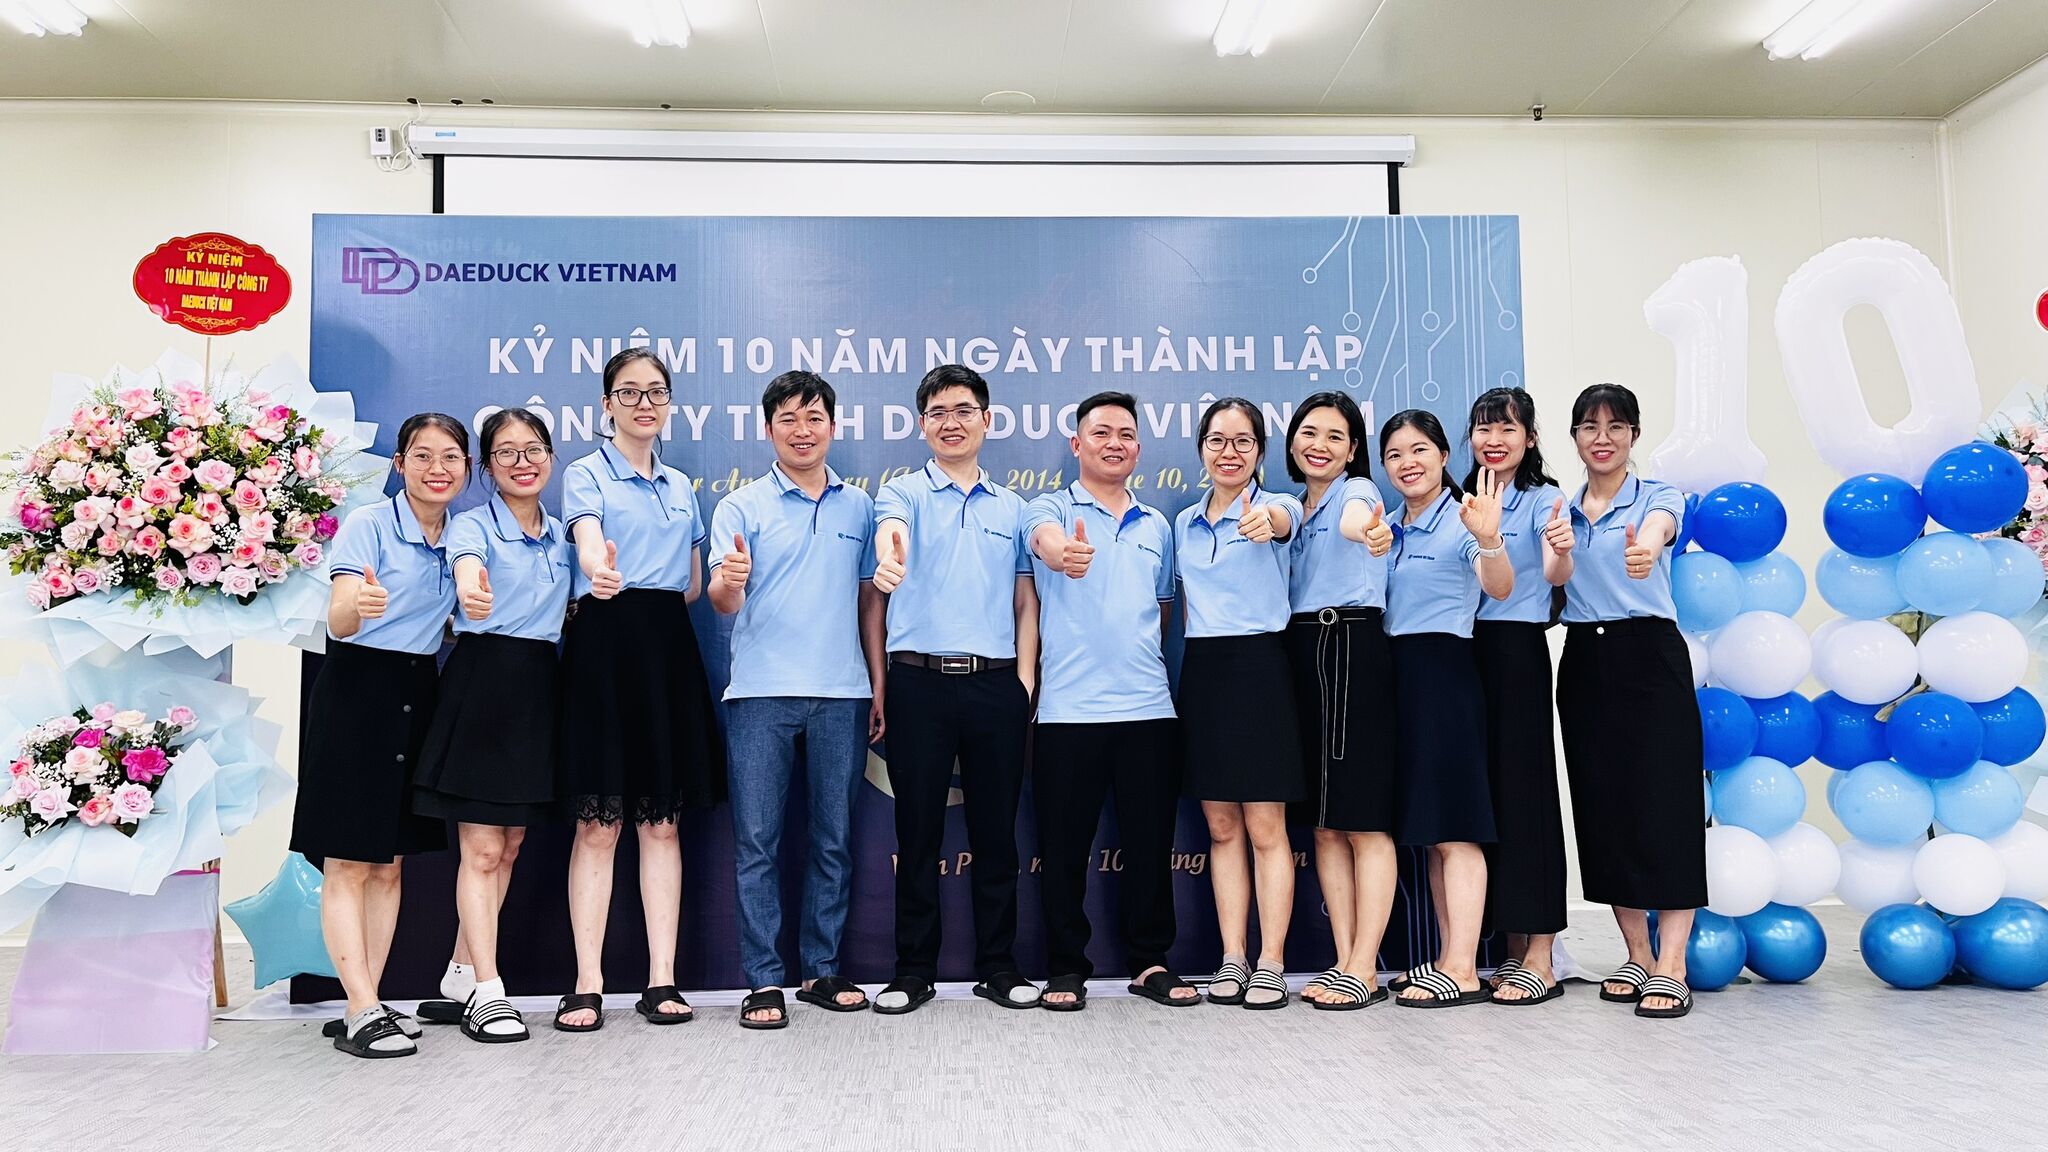 Daeduck Electronics' Vietnam factory celebrates its 10th anniversary